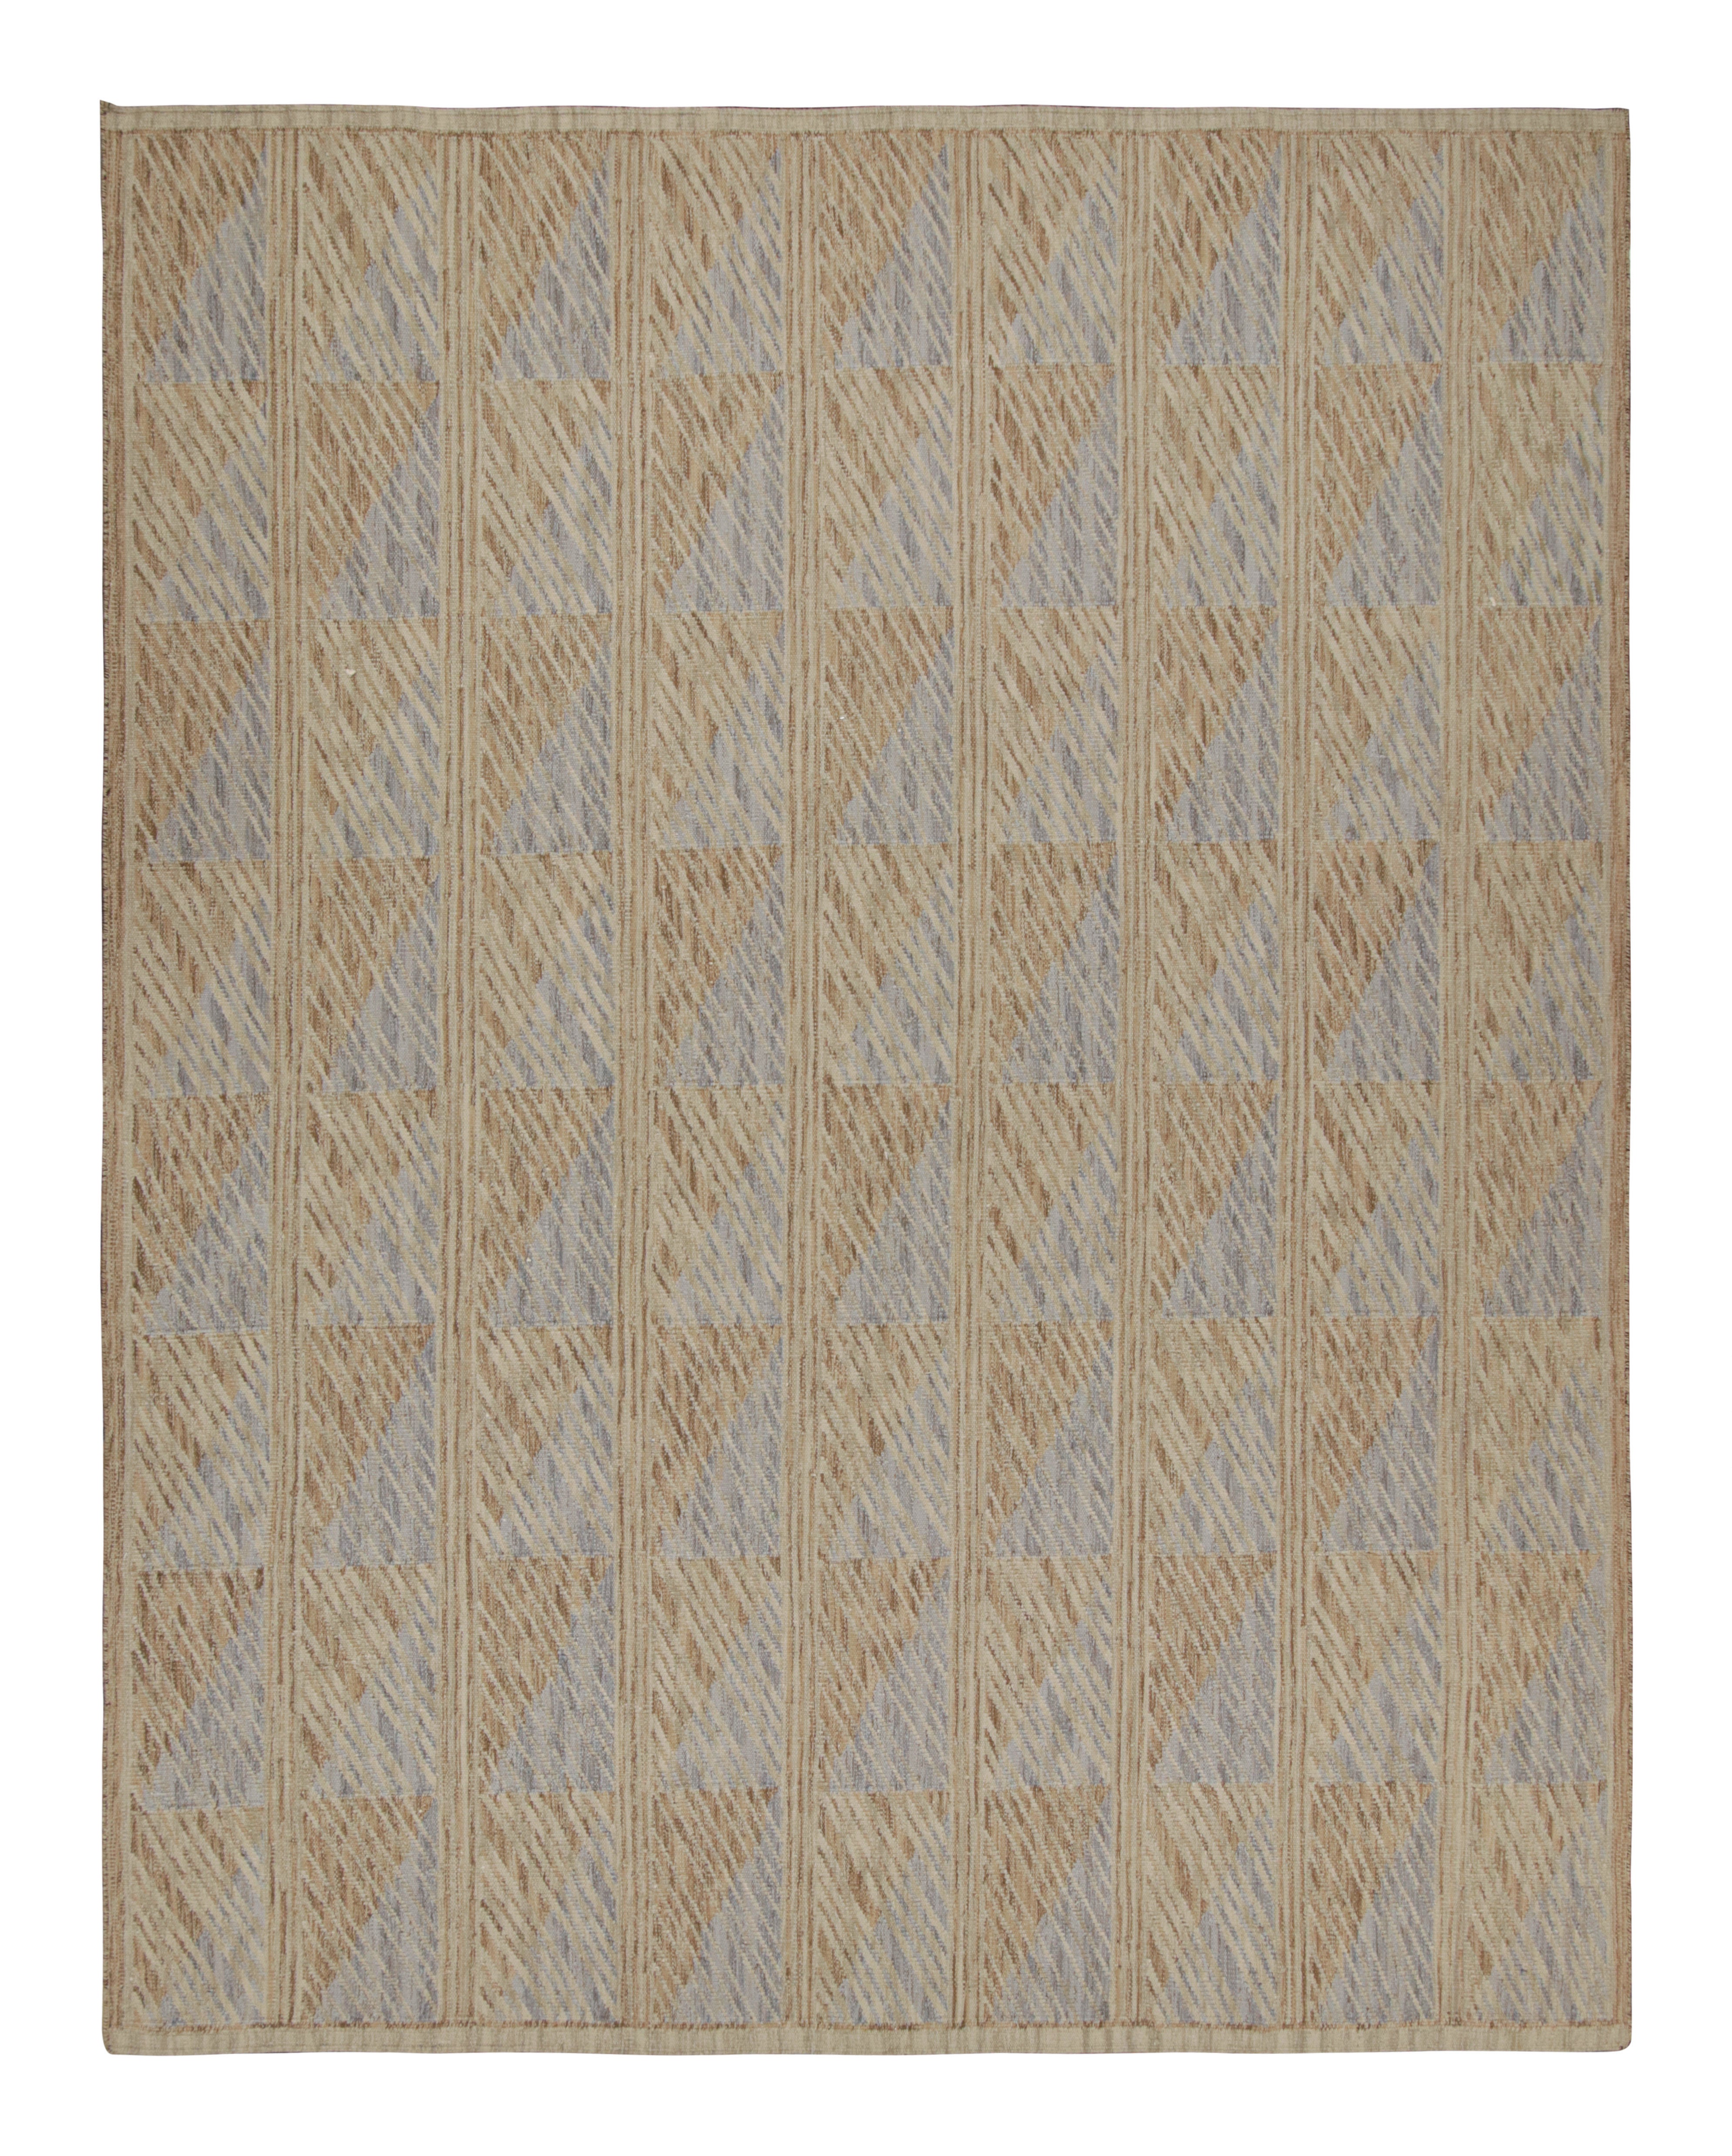 Rug & Kilim’s Oversized Scandinavian Style Rug in Beige-Brown Geometric Patterns